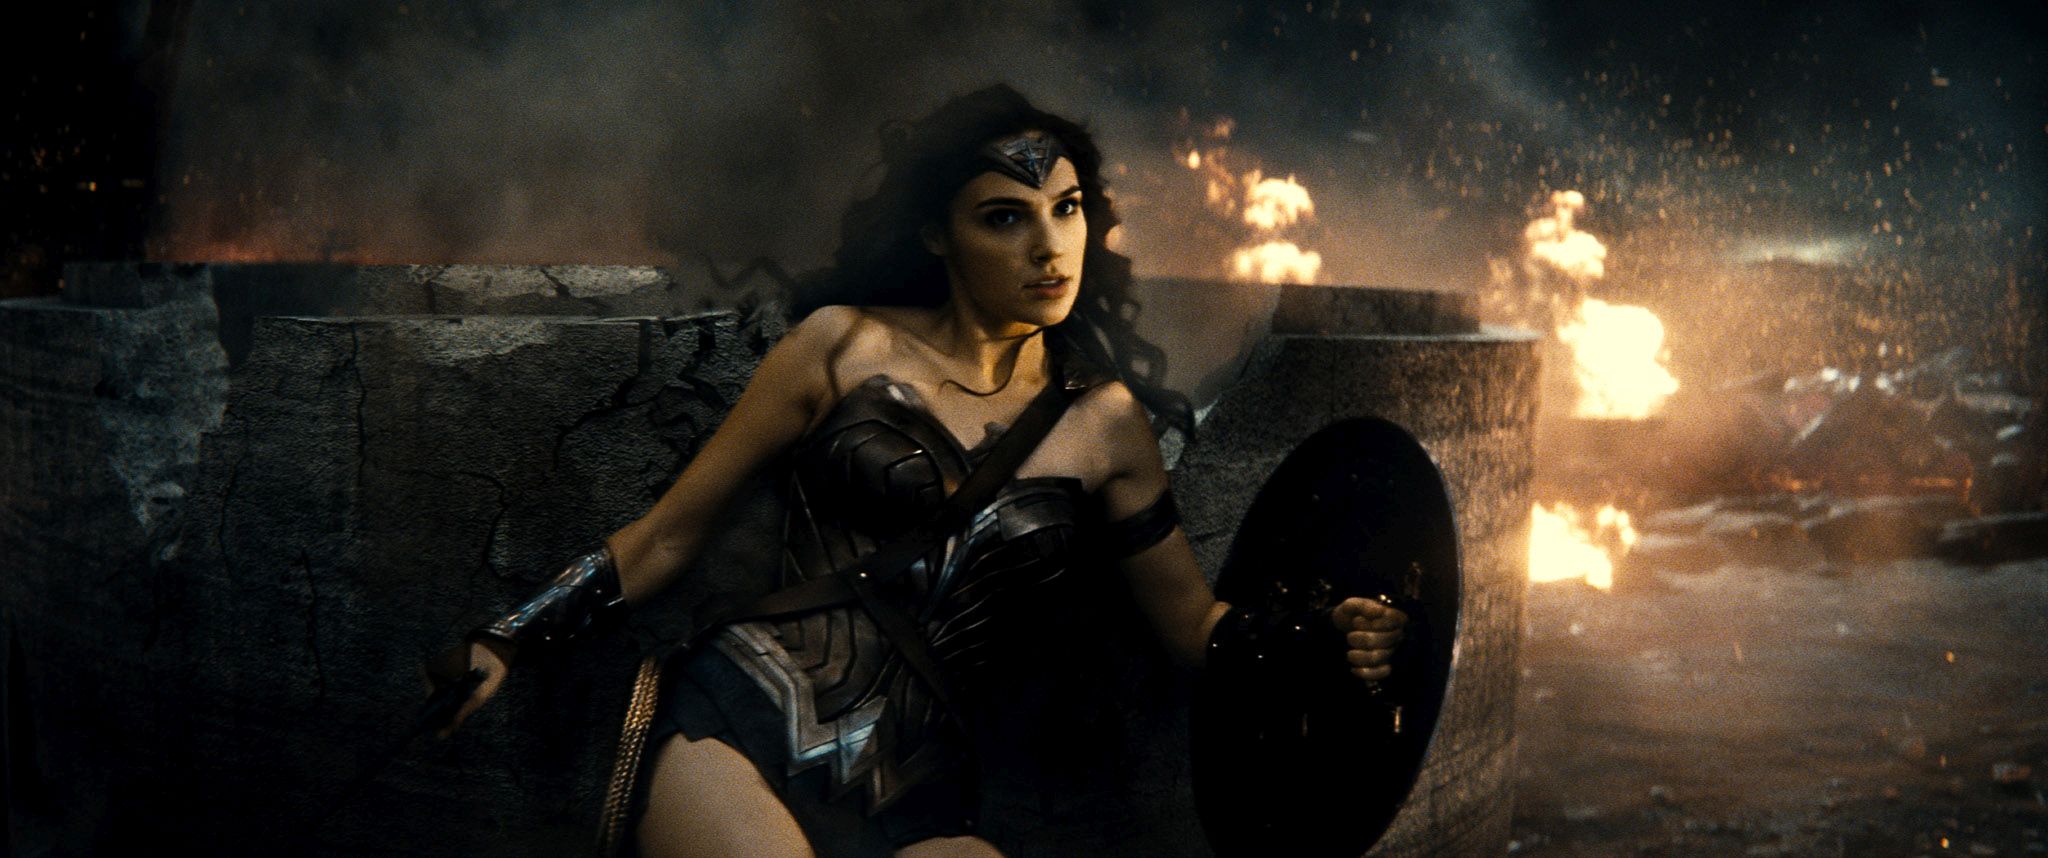 bvshresp29 Watch: Batman Vs. Superman Wonder Woman #1 Movie Spot